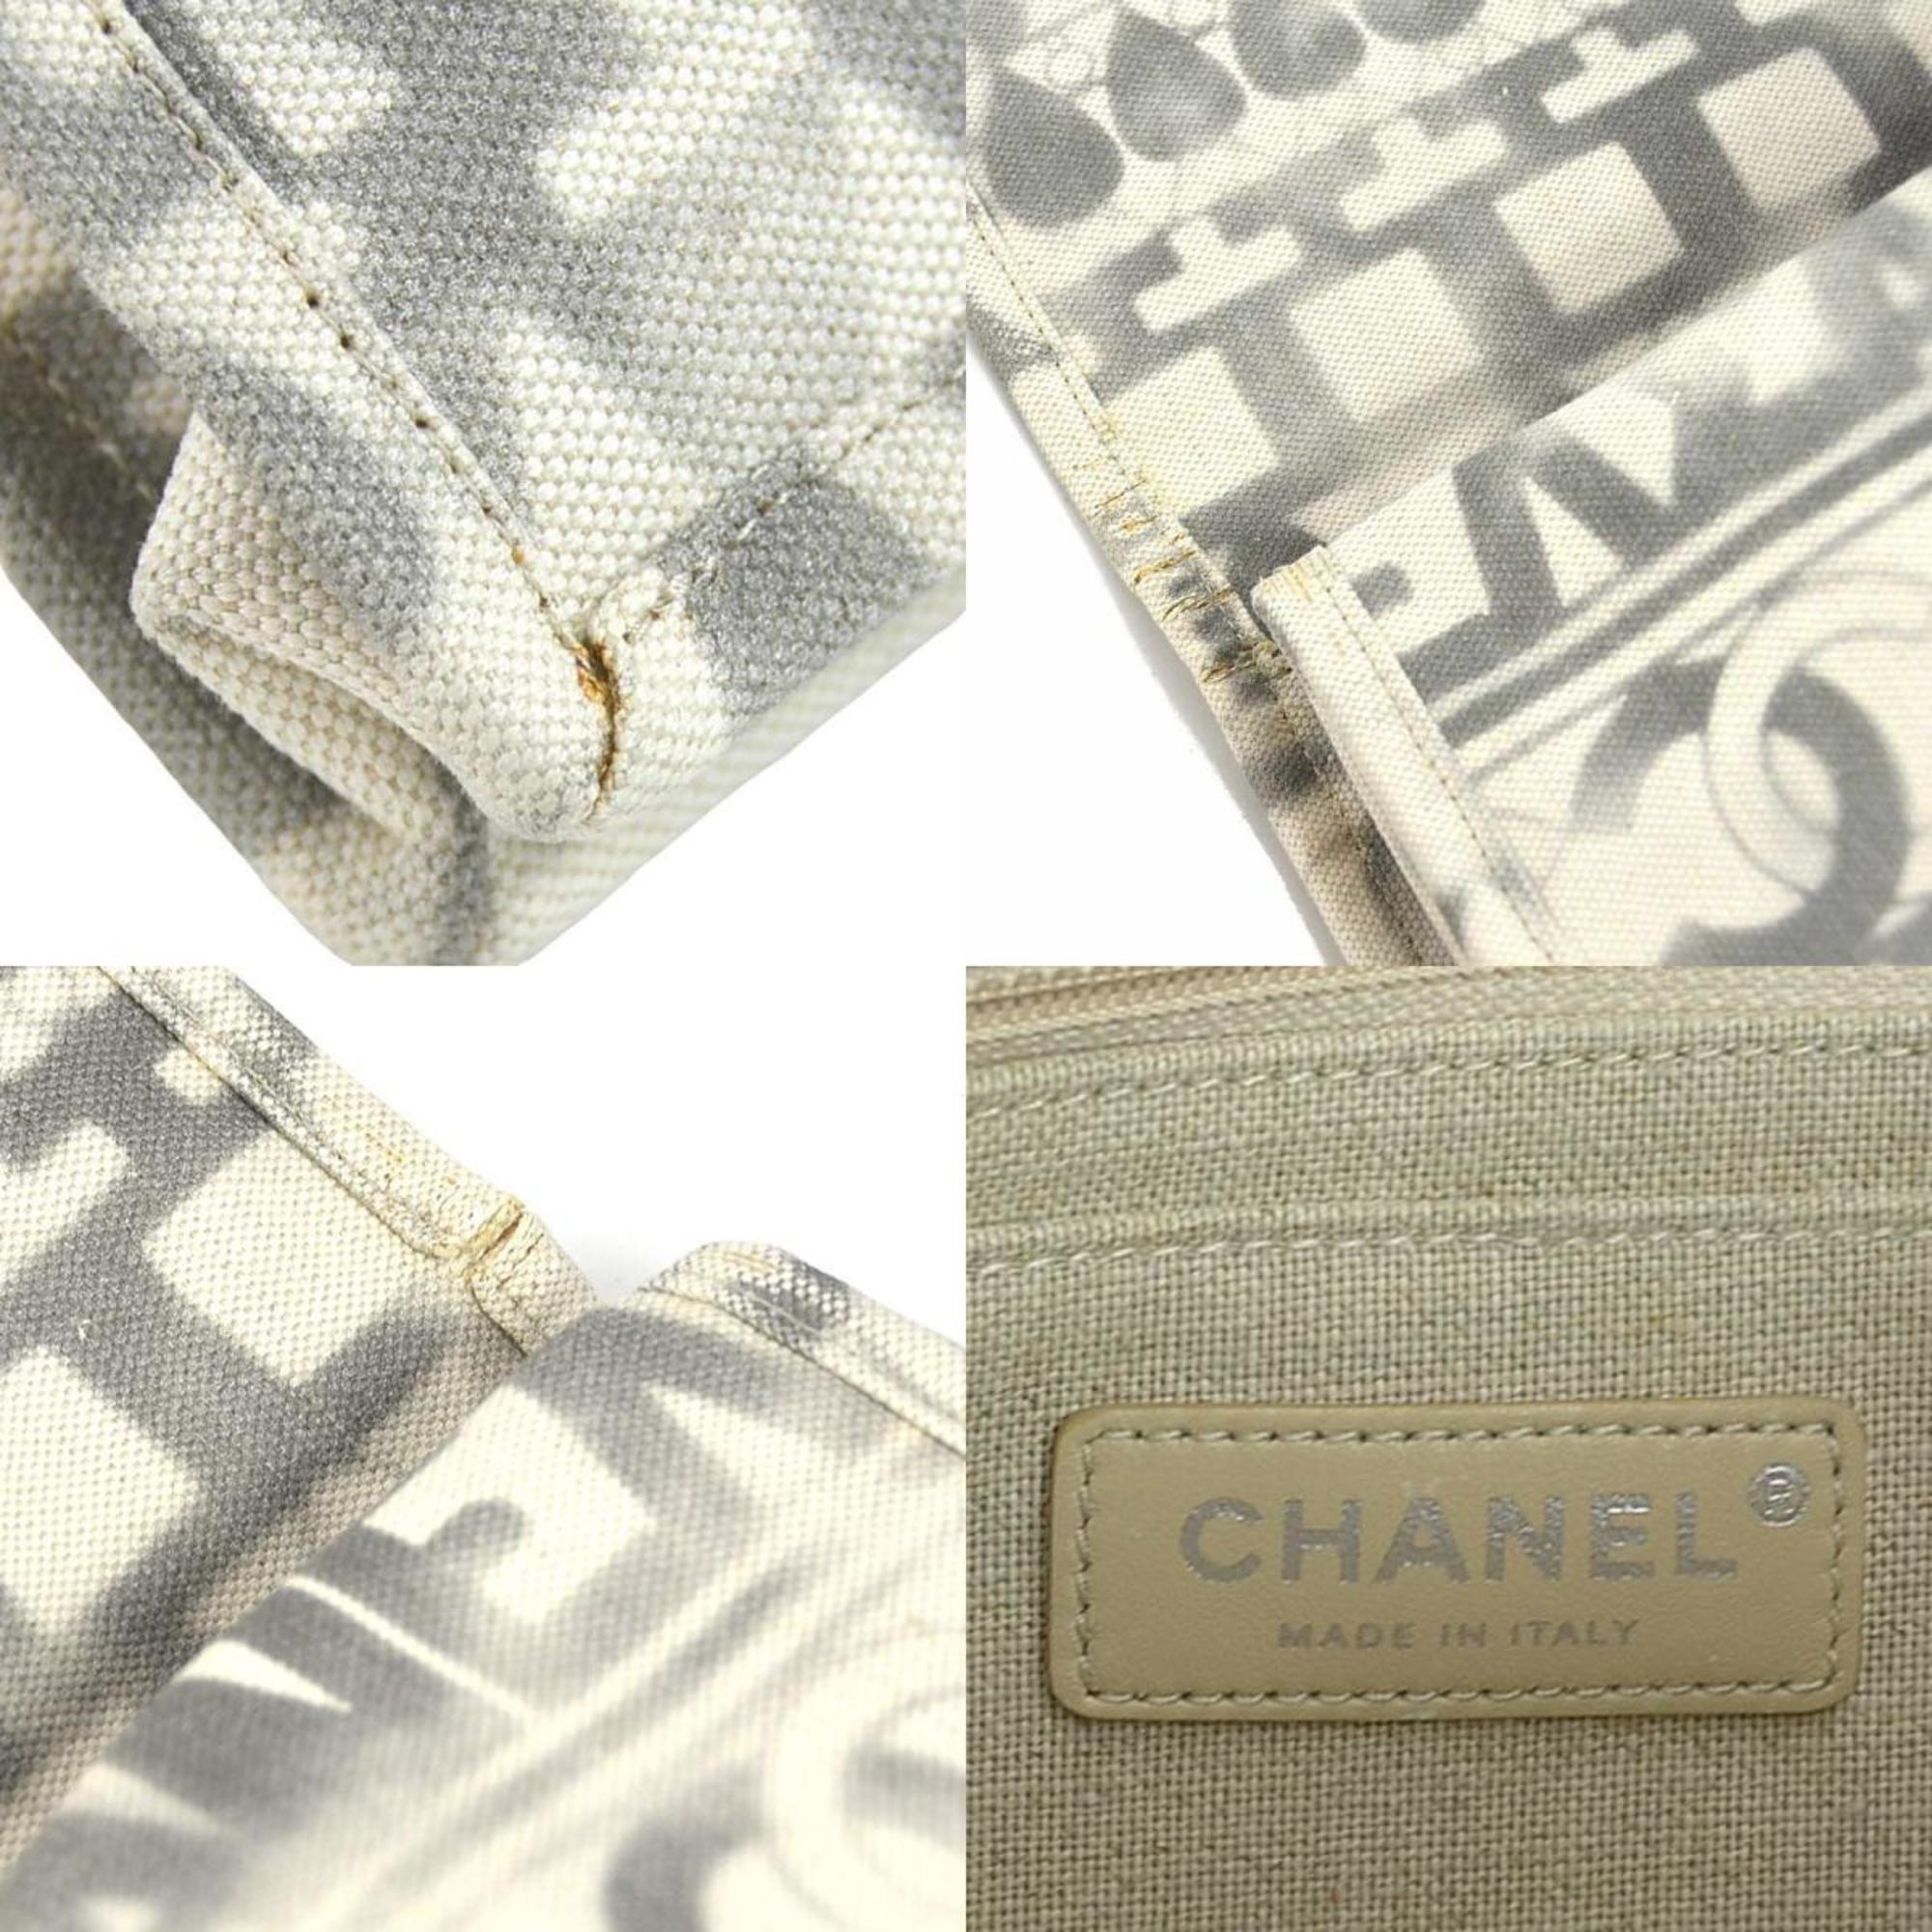 CHANEL Clutch Bag Coco Mark Canvas Off-White/Grey Women's e58542g